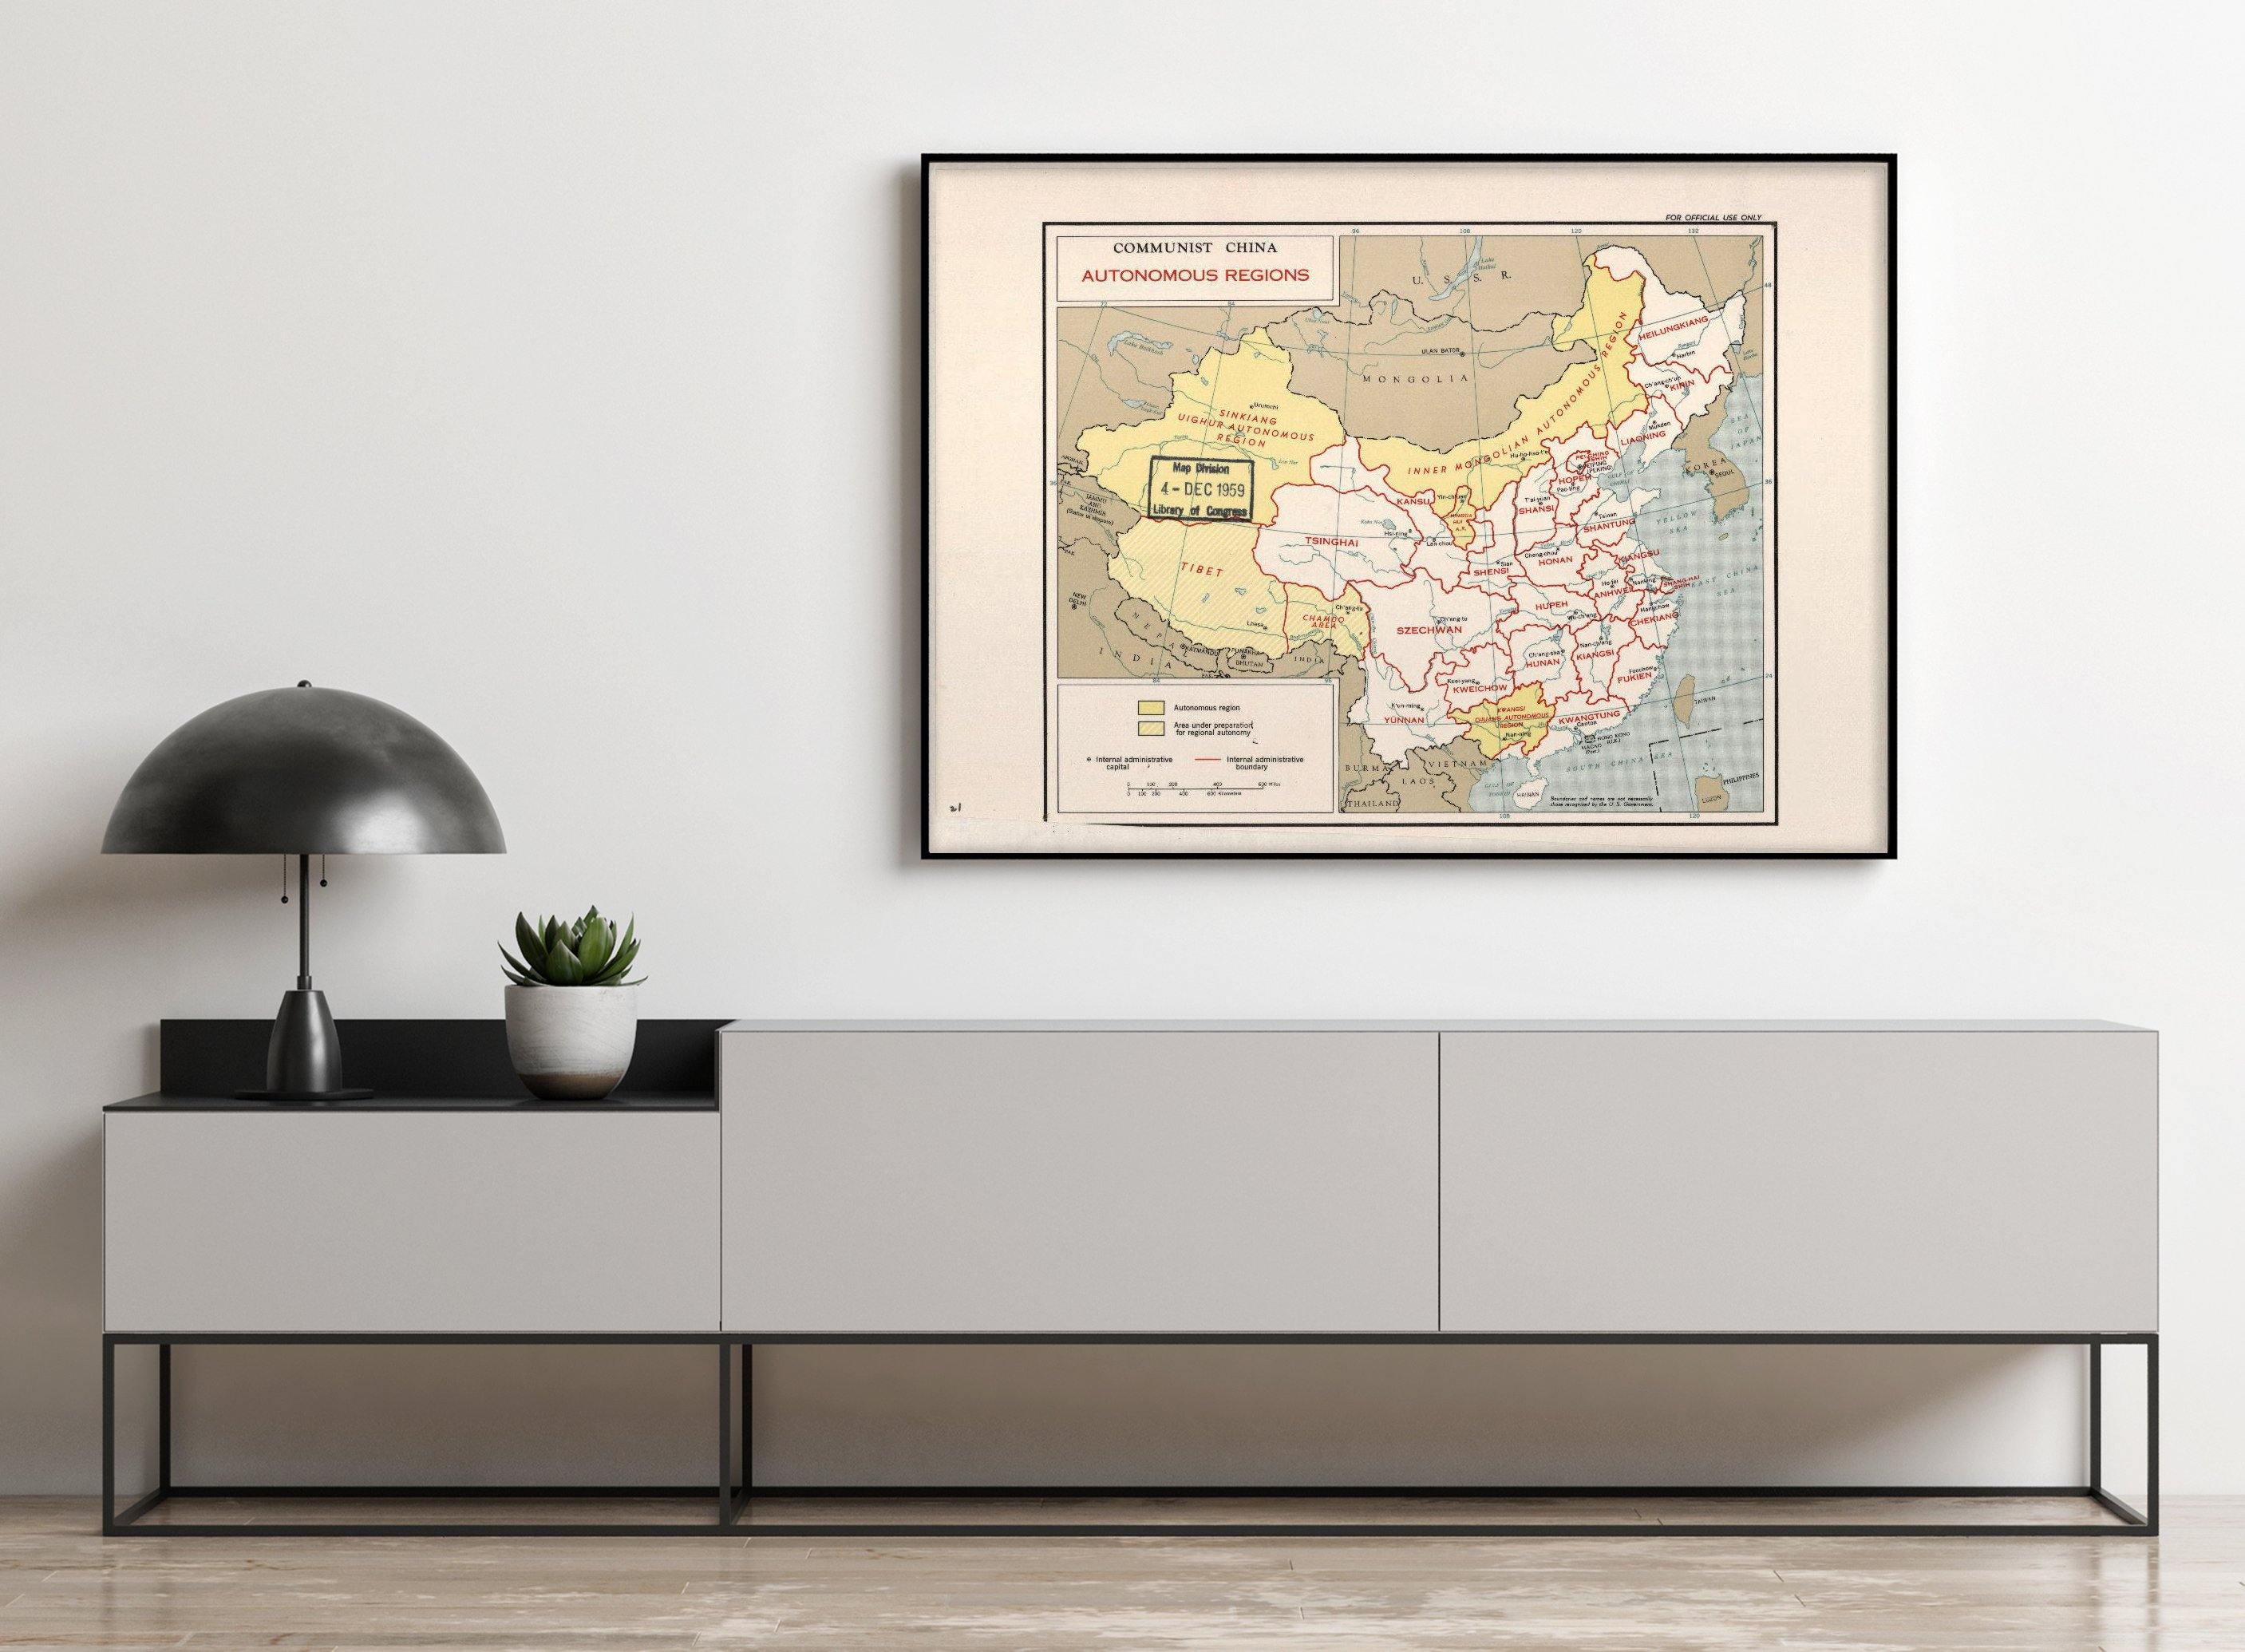 1959 Map| Communist China autonomous regions| Administrative and Polit - New York Map Company